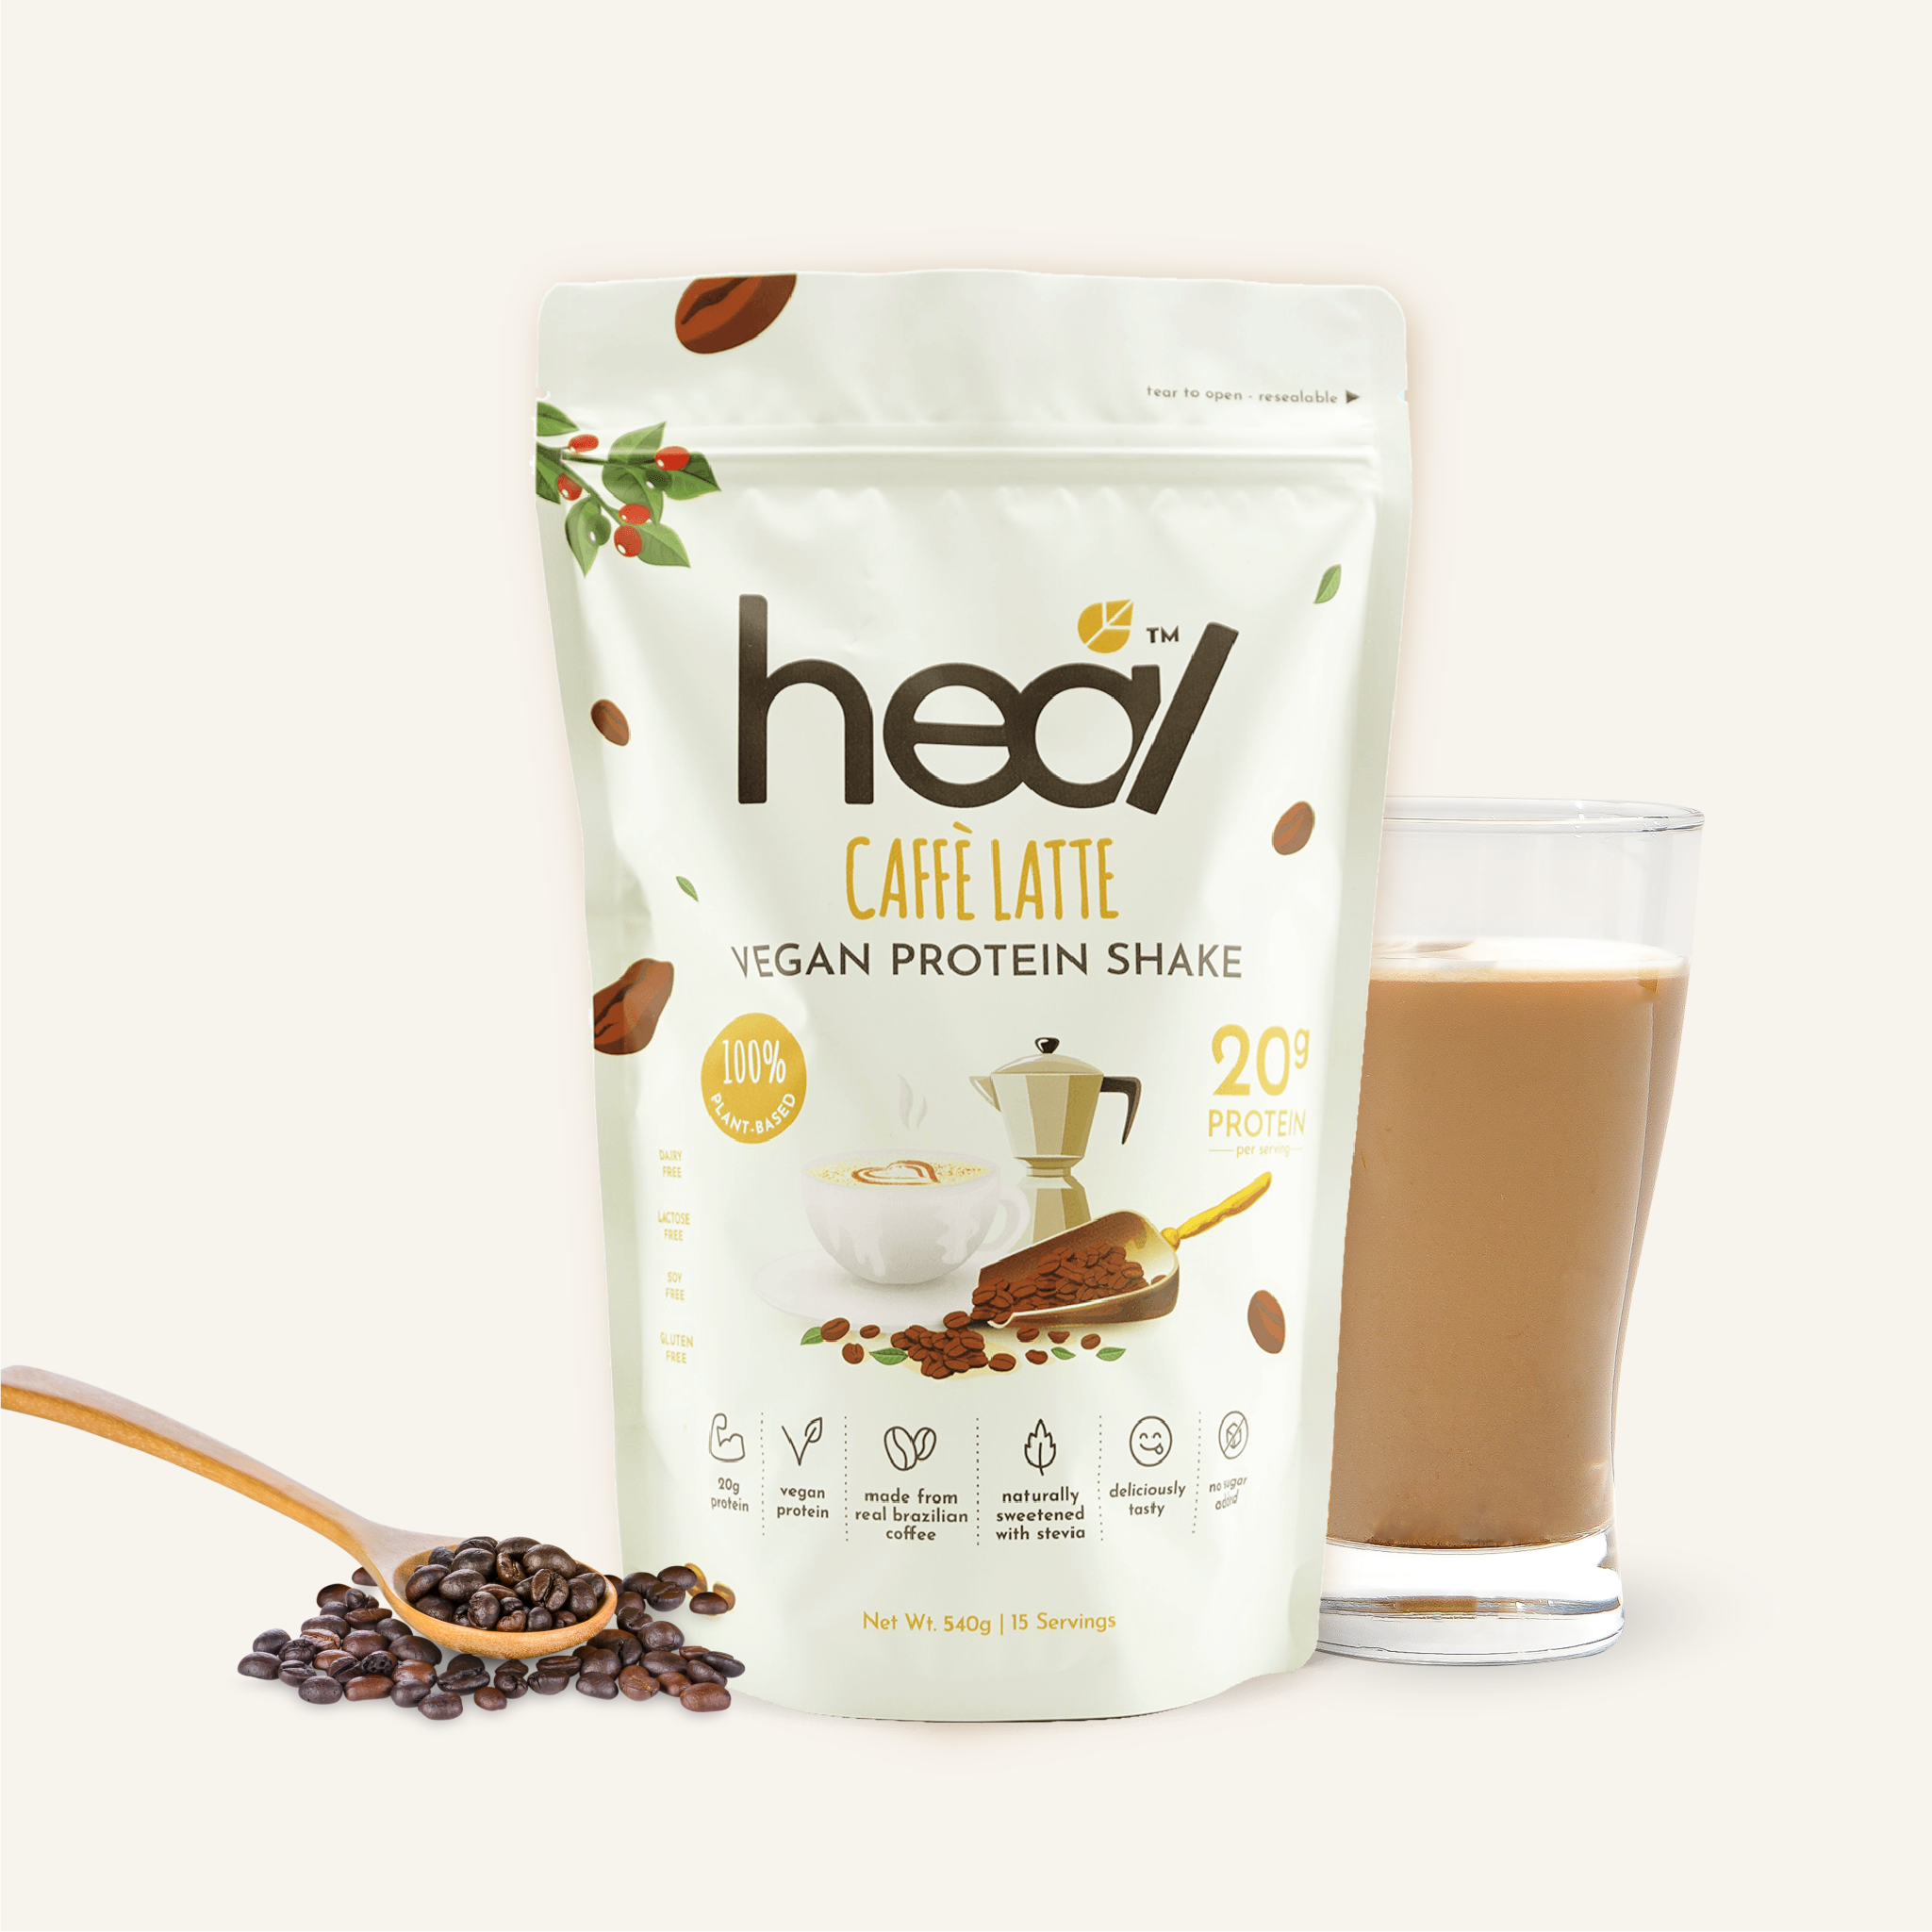 [Subscription Plan] Heal Caffe Latte Vegan Protein Shake, 15 Servings Value Pack